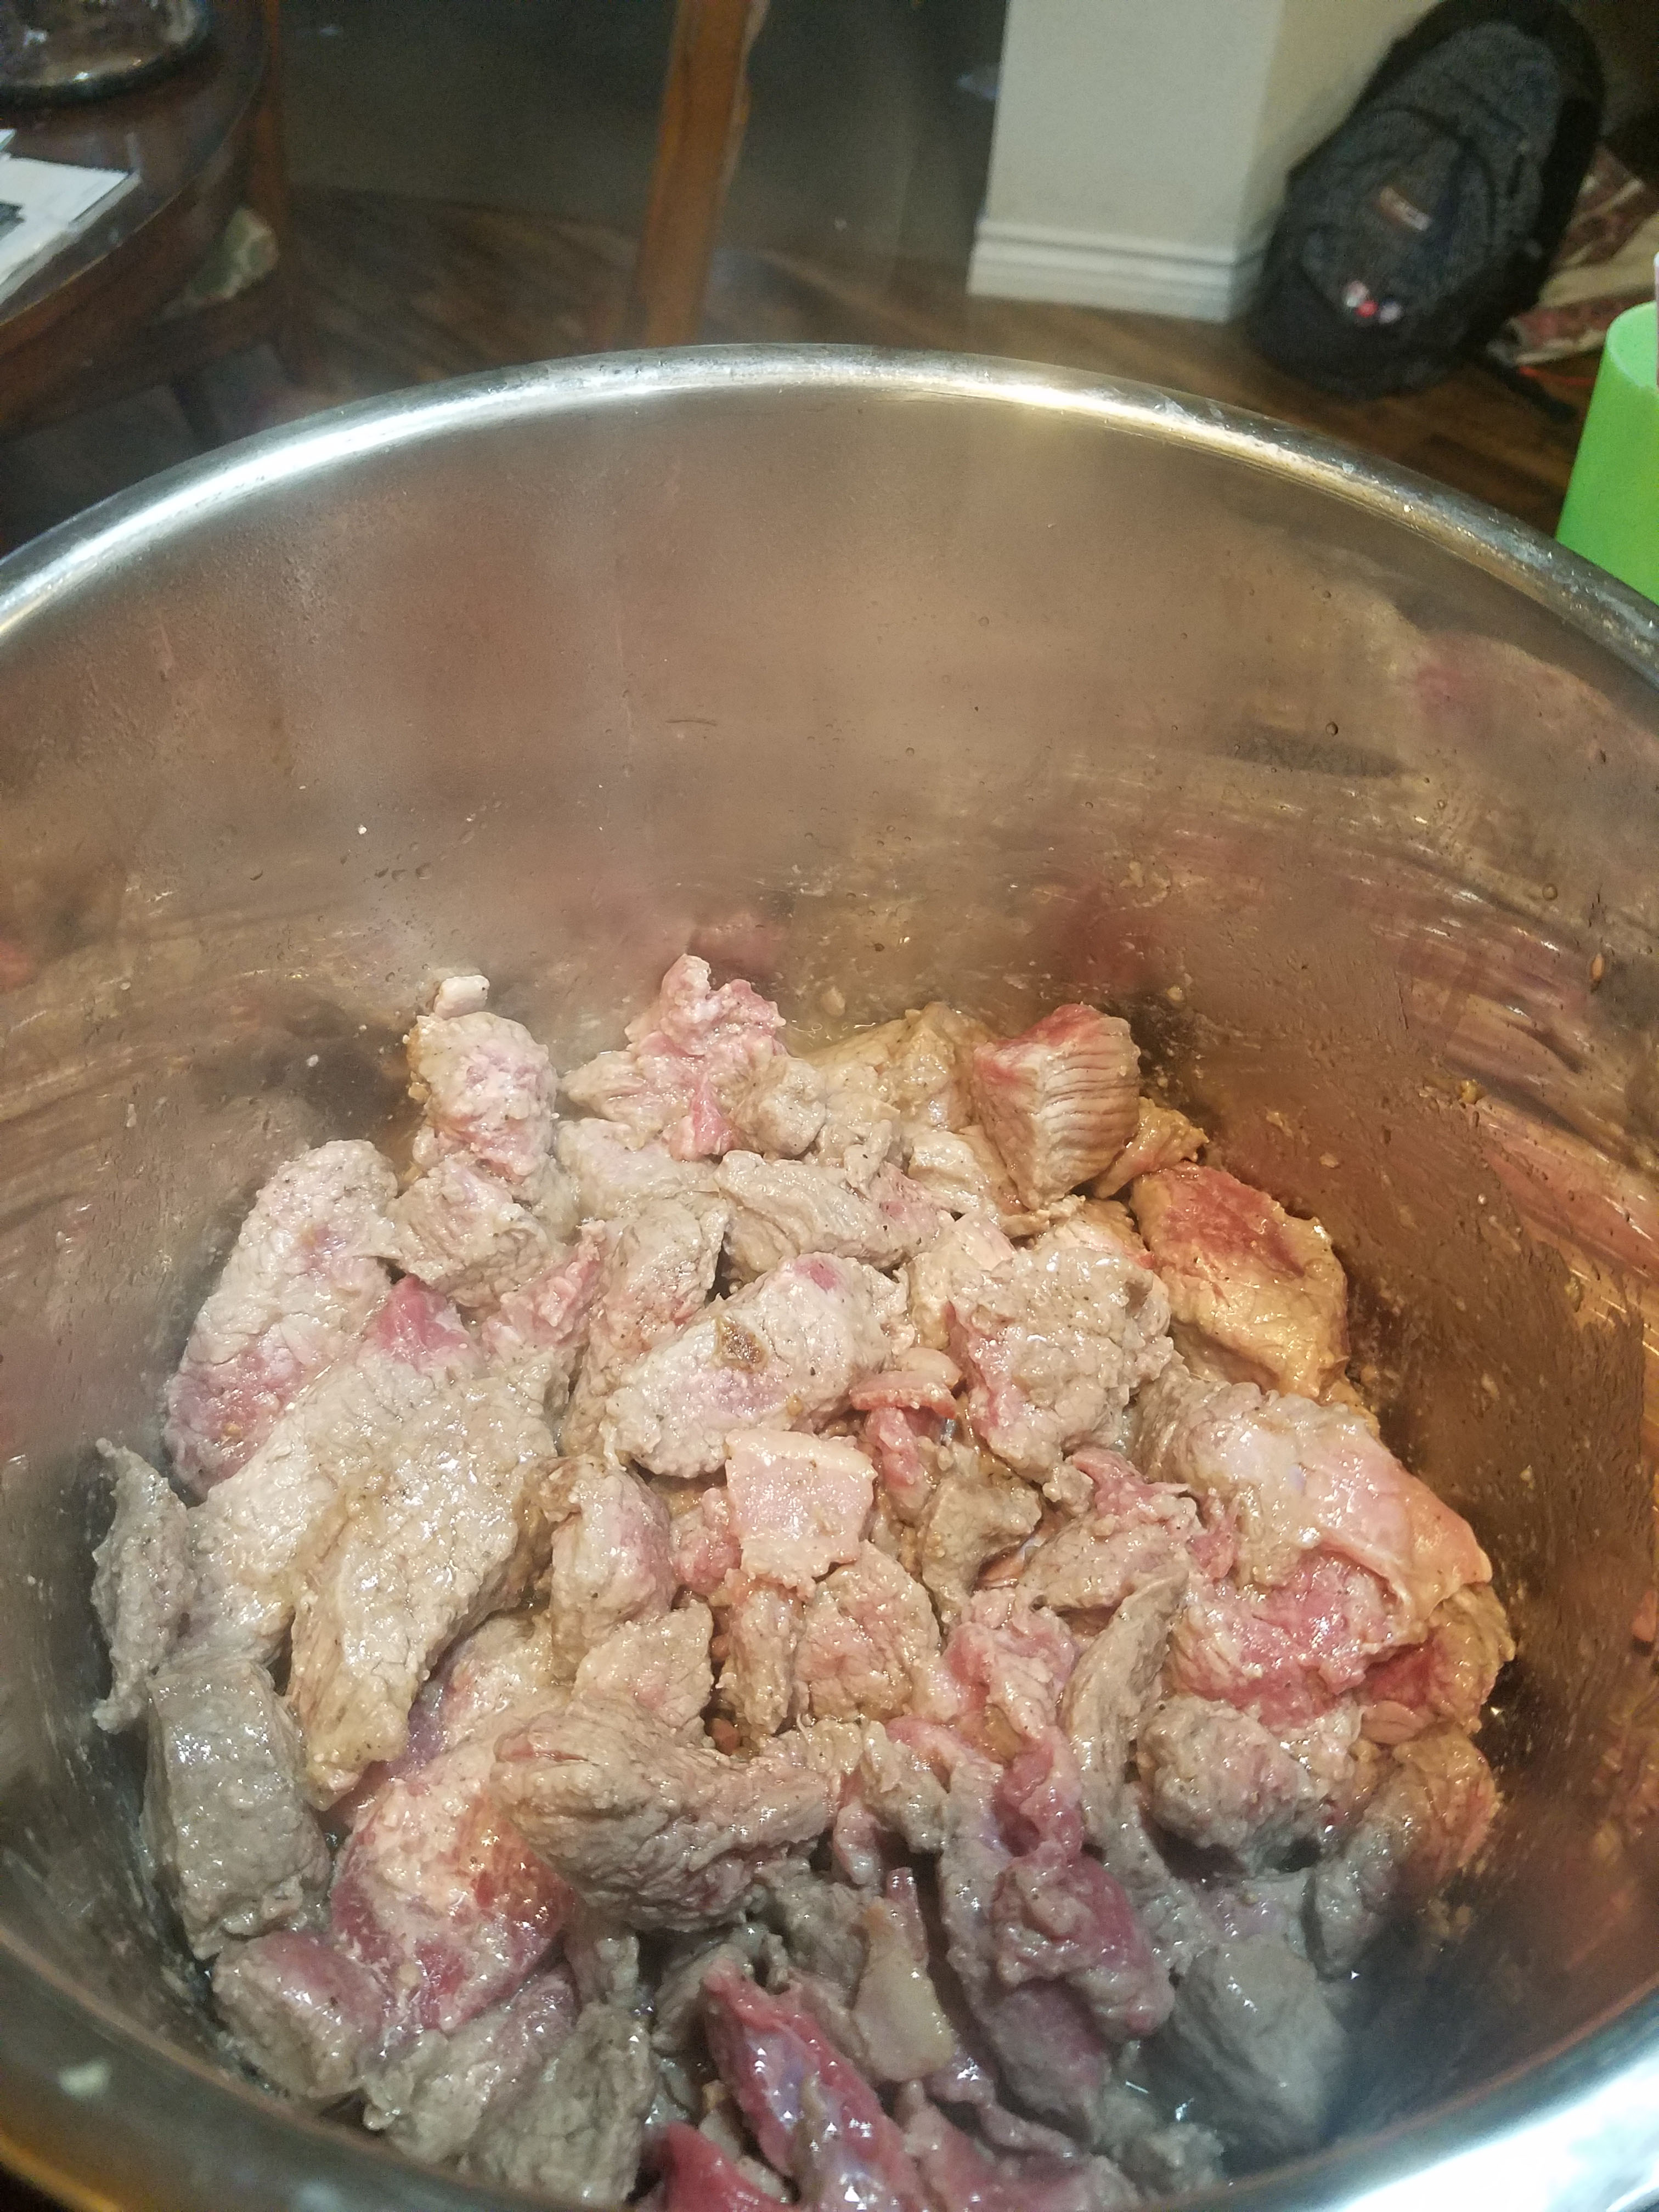 Instant Pot Beef Bourguignon